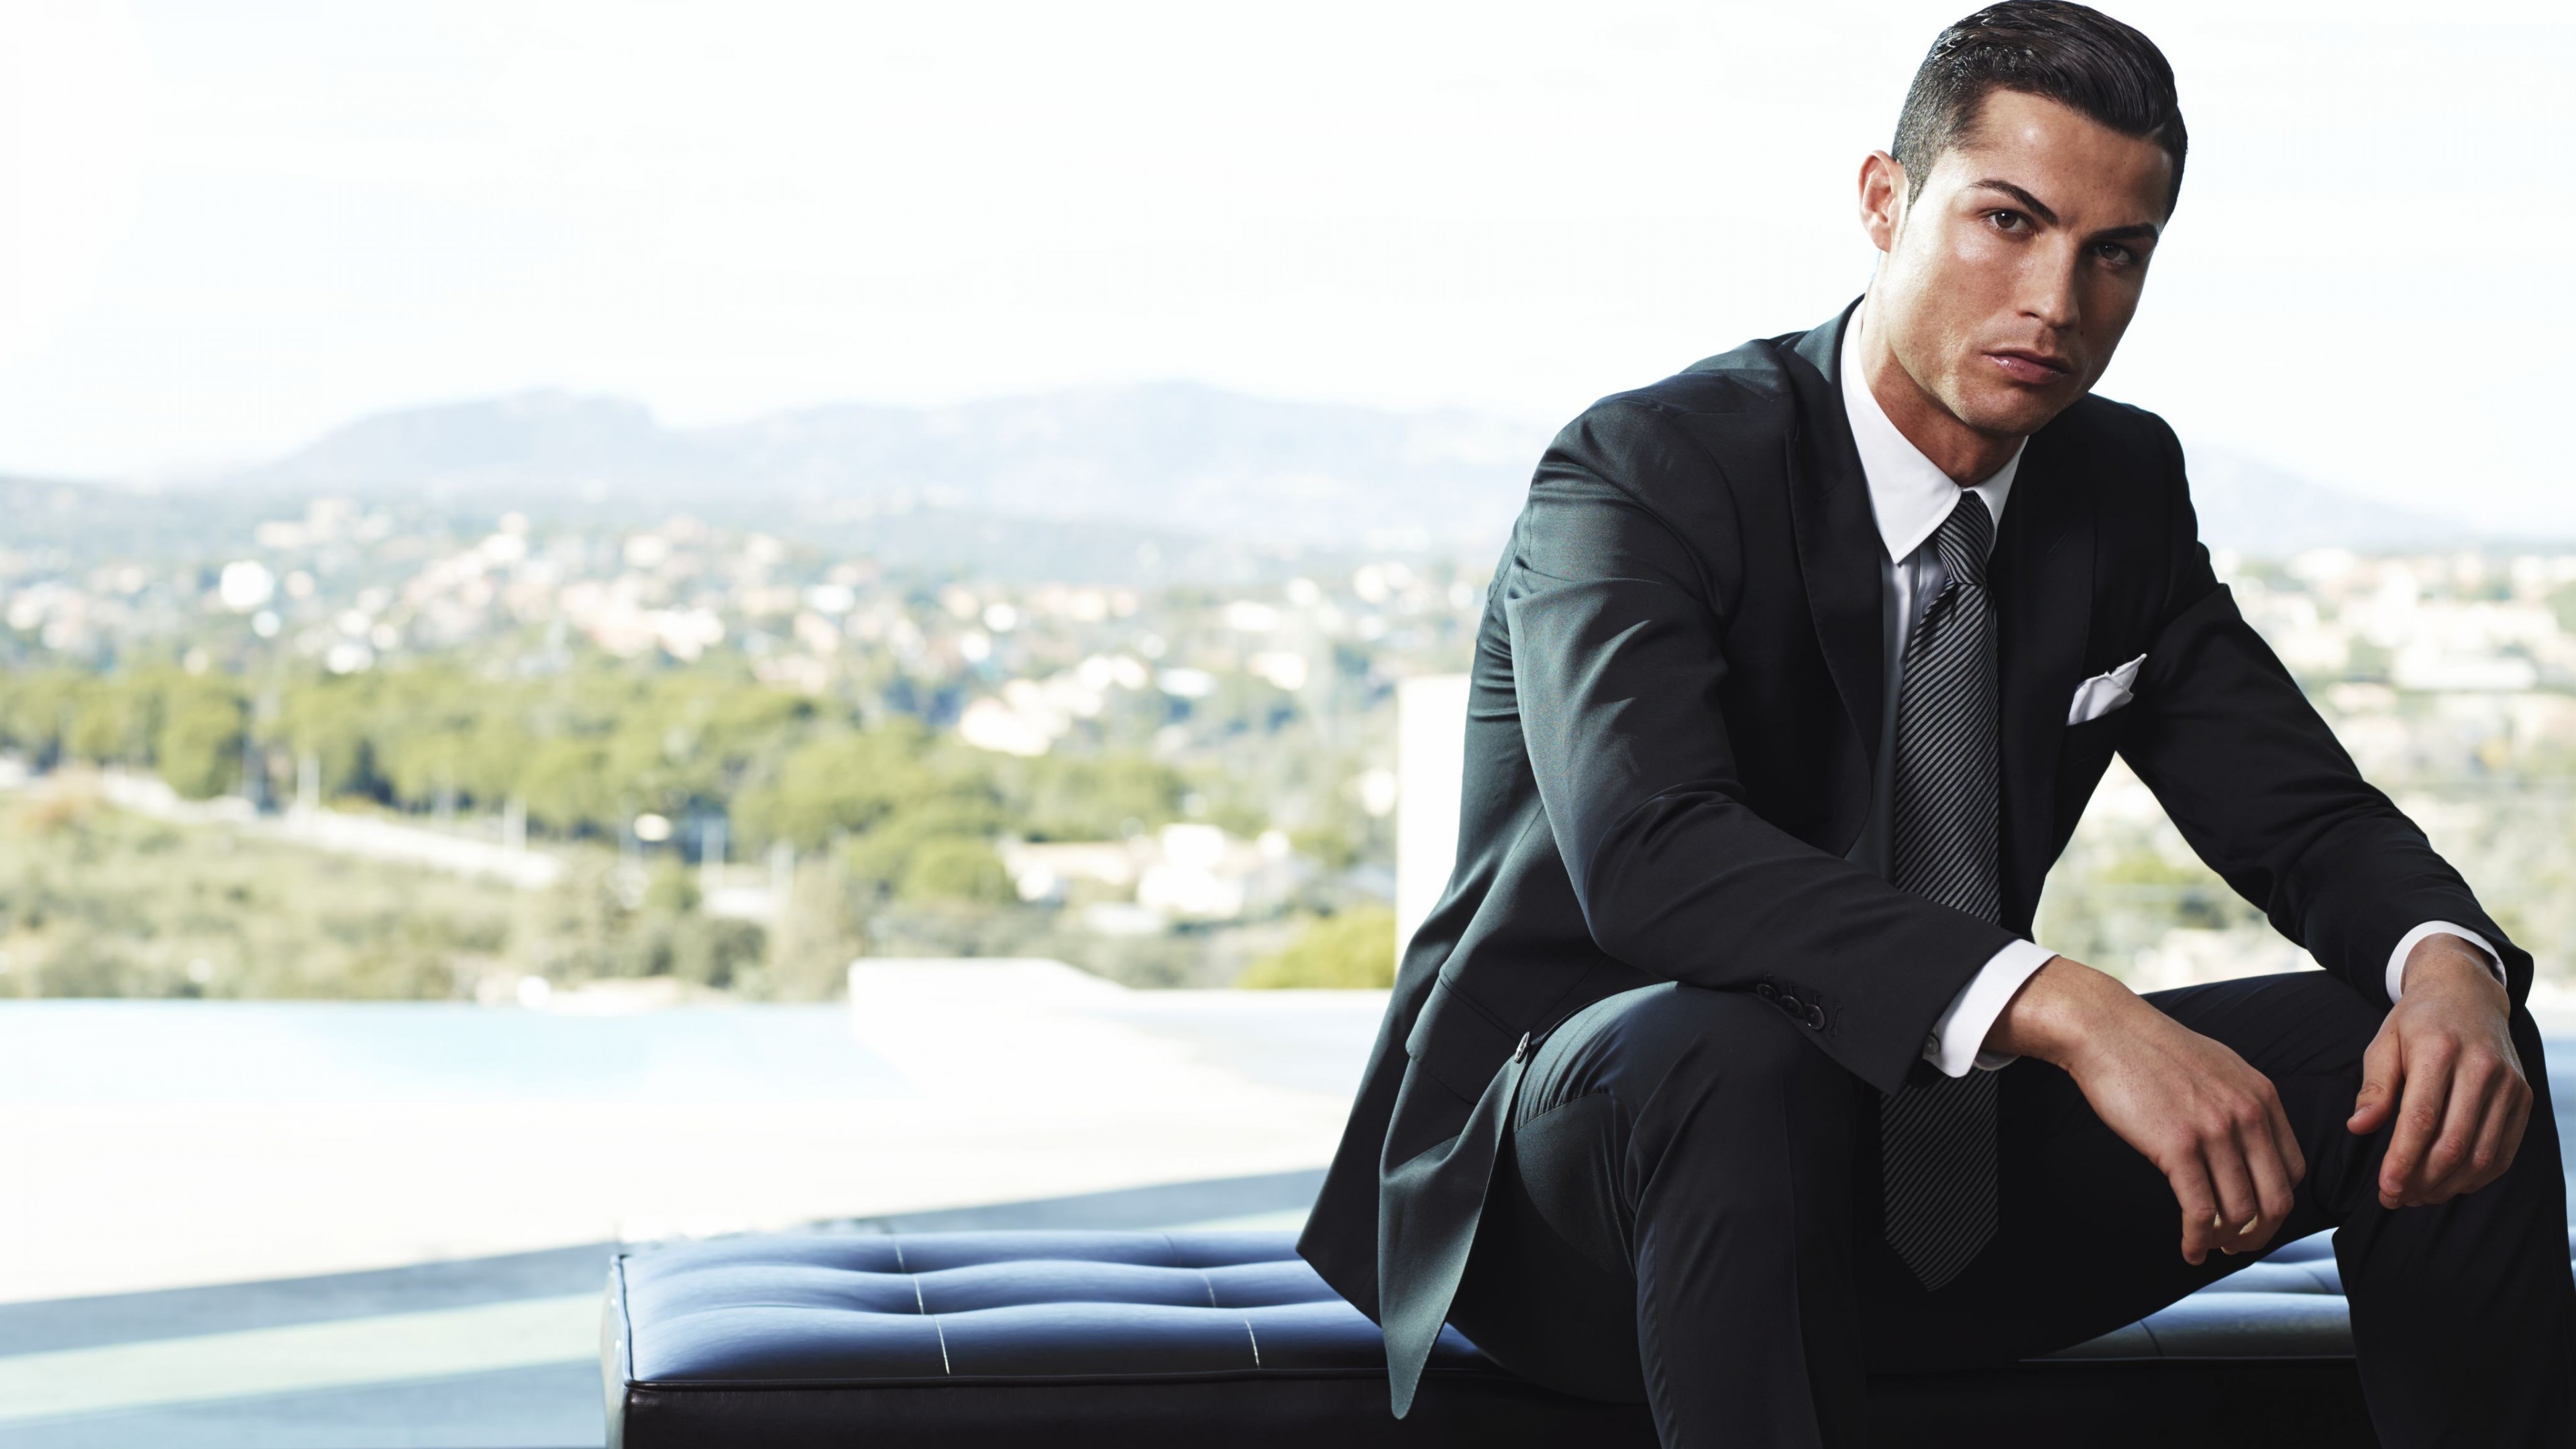 ronaldo wallpaper,suit,sitting,white collar worker,formal wear,businessperson